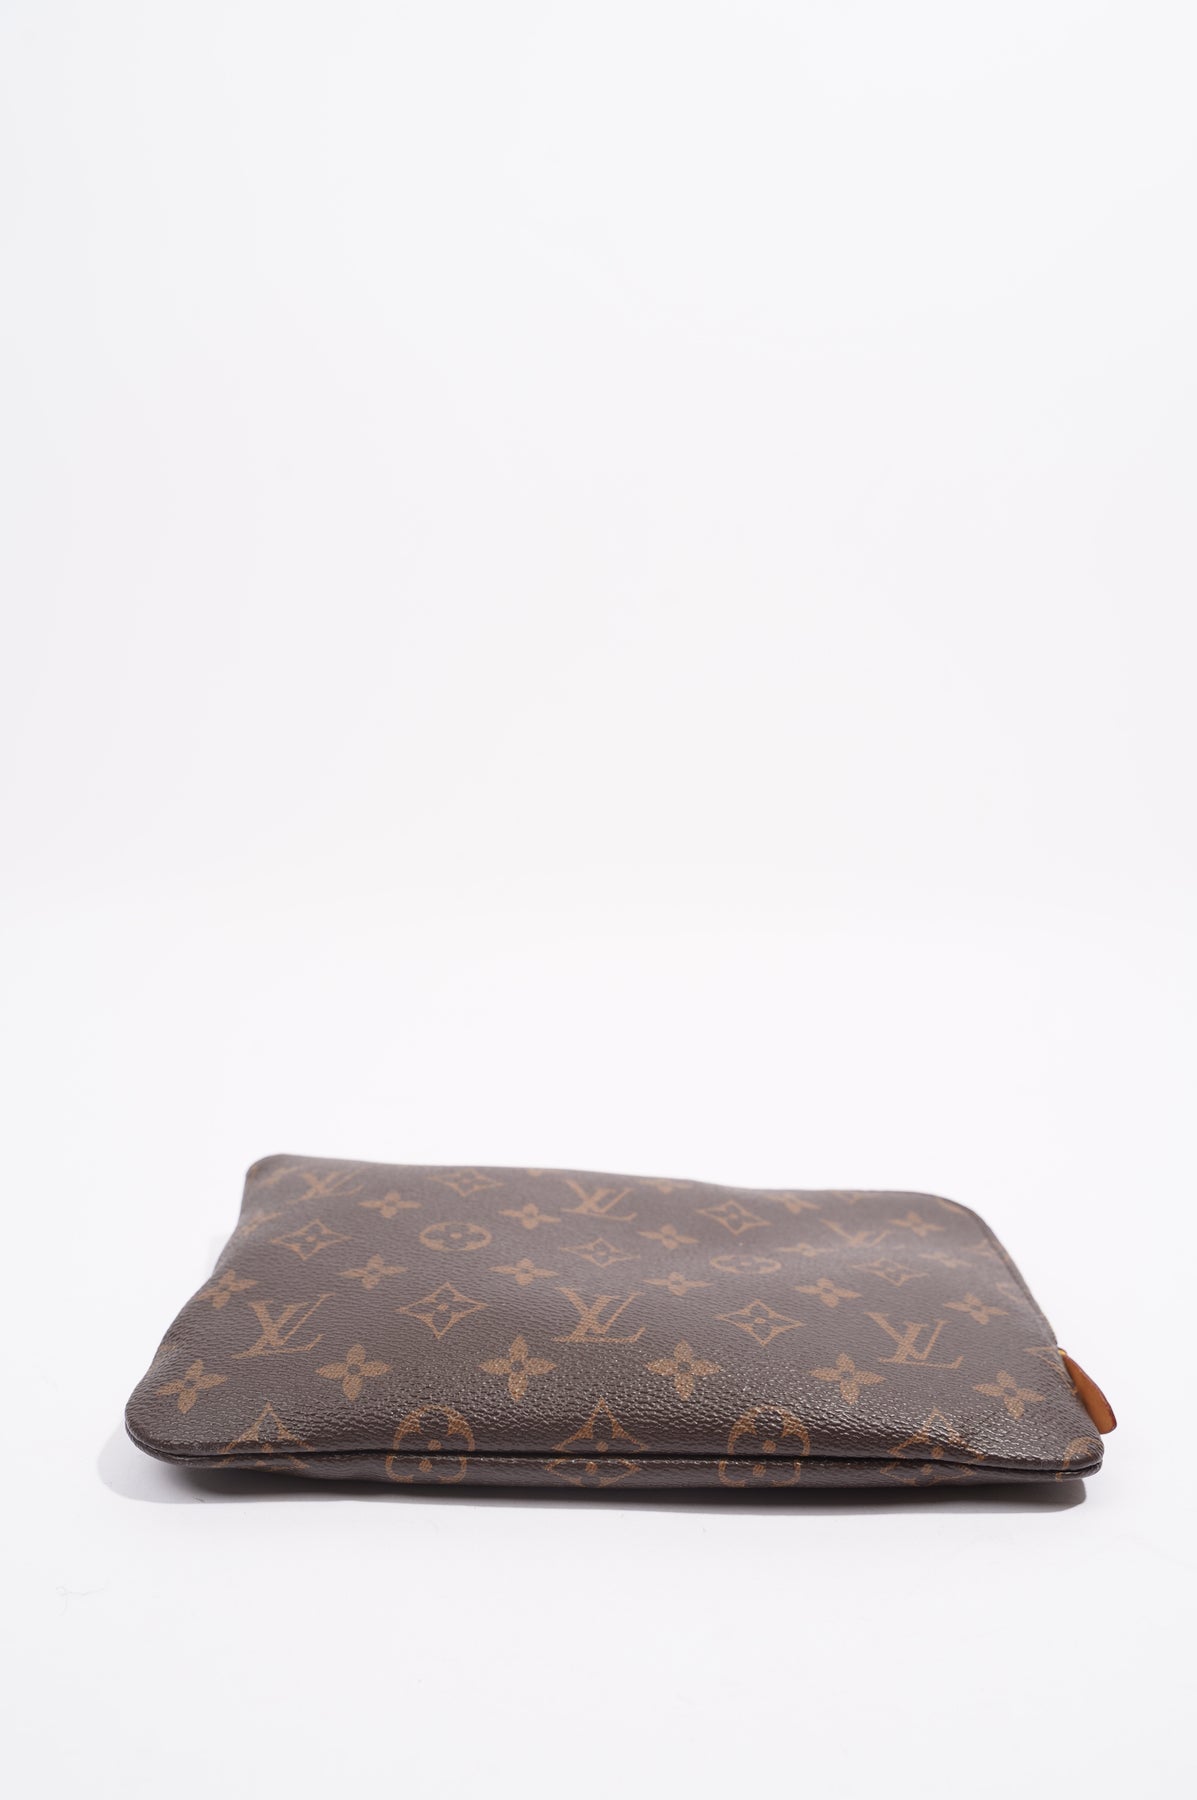 Louis Vuitton Monogram Etui Voyage PM - Brown Clutches, Handbags